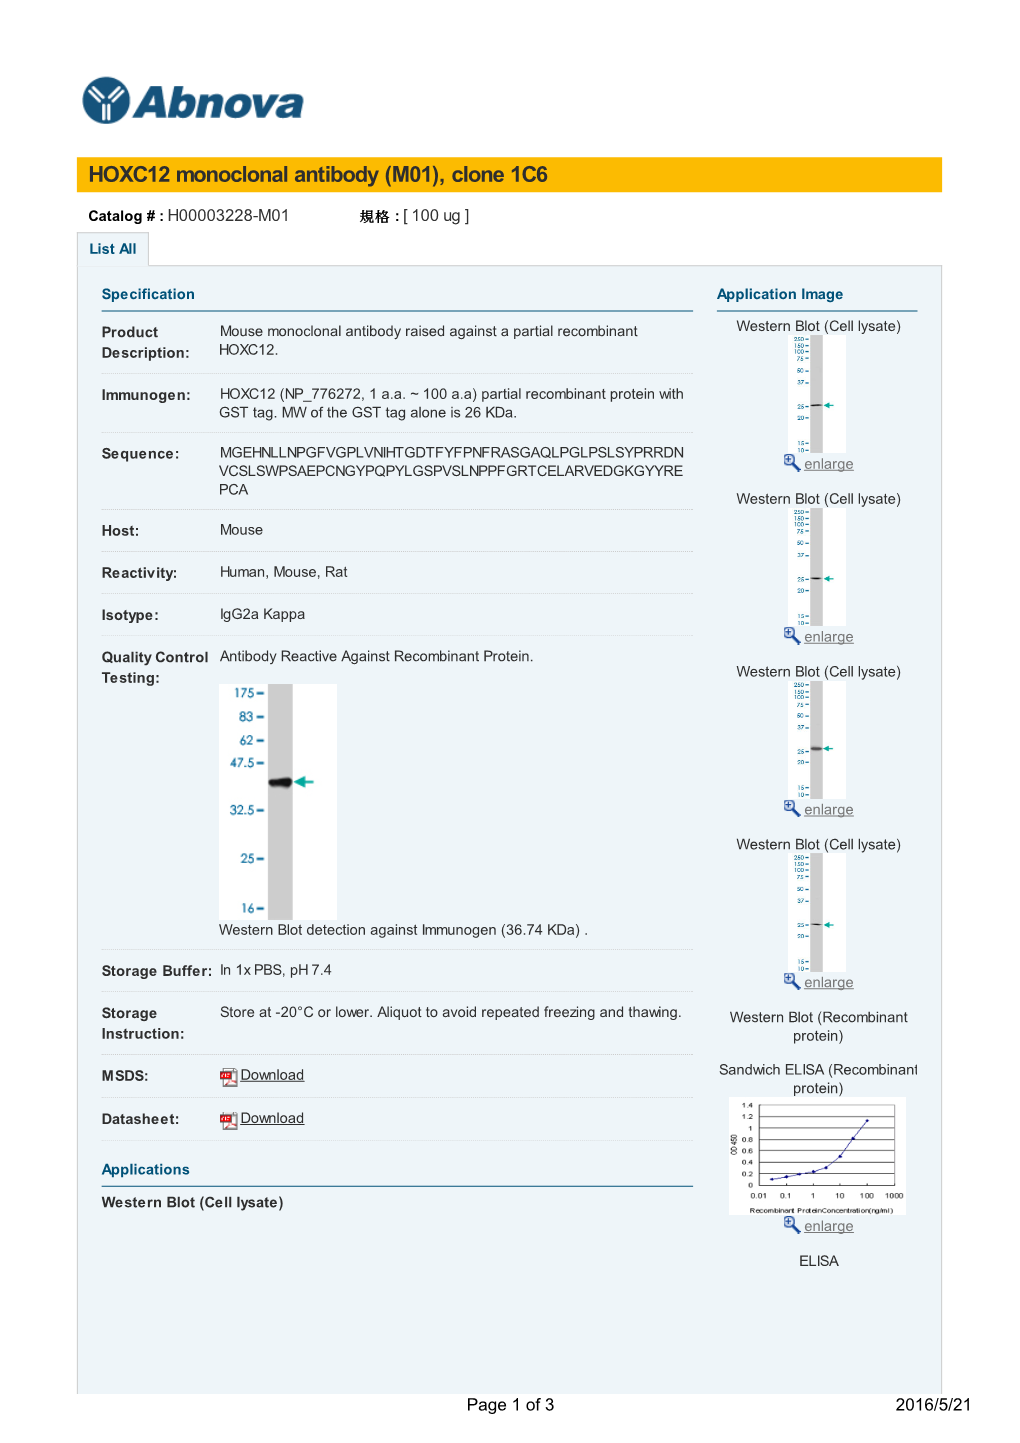 HOXC12 Monoclonal Antibody (M01), Clone 1C6